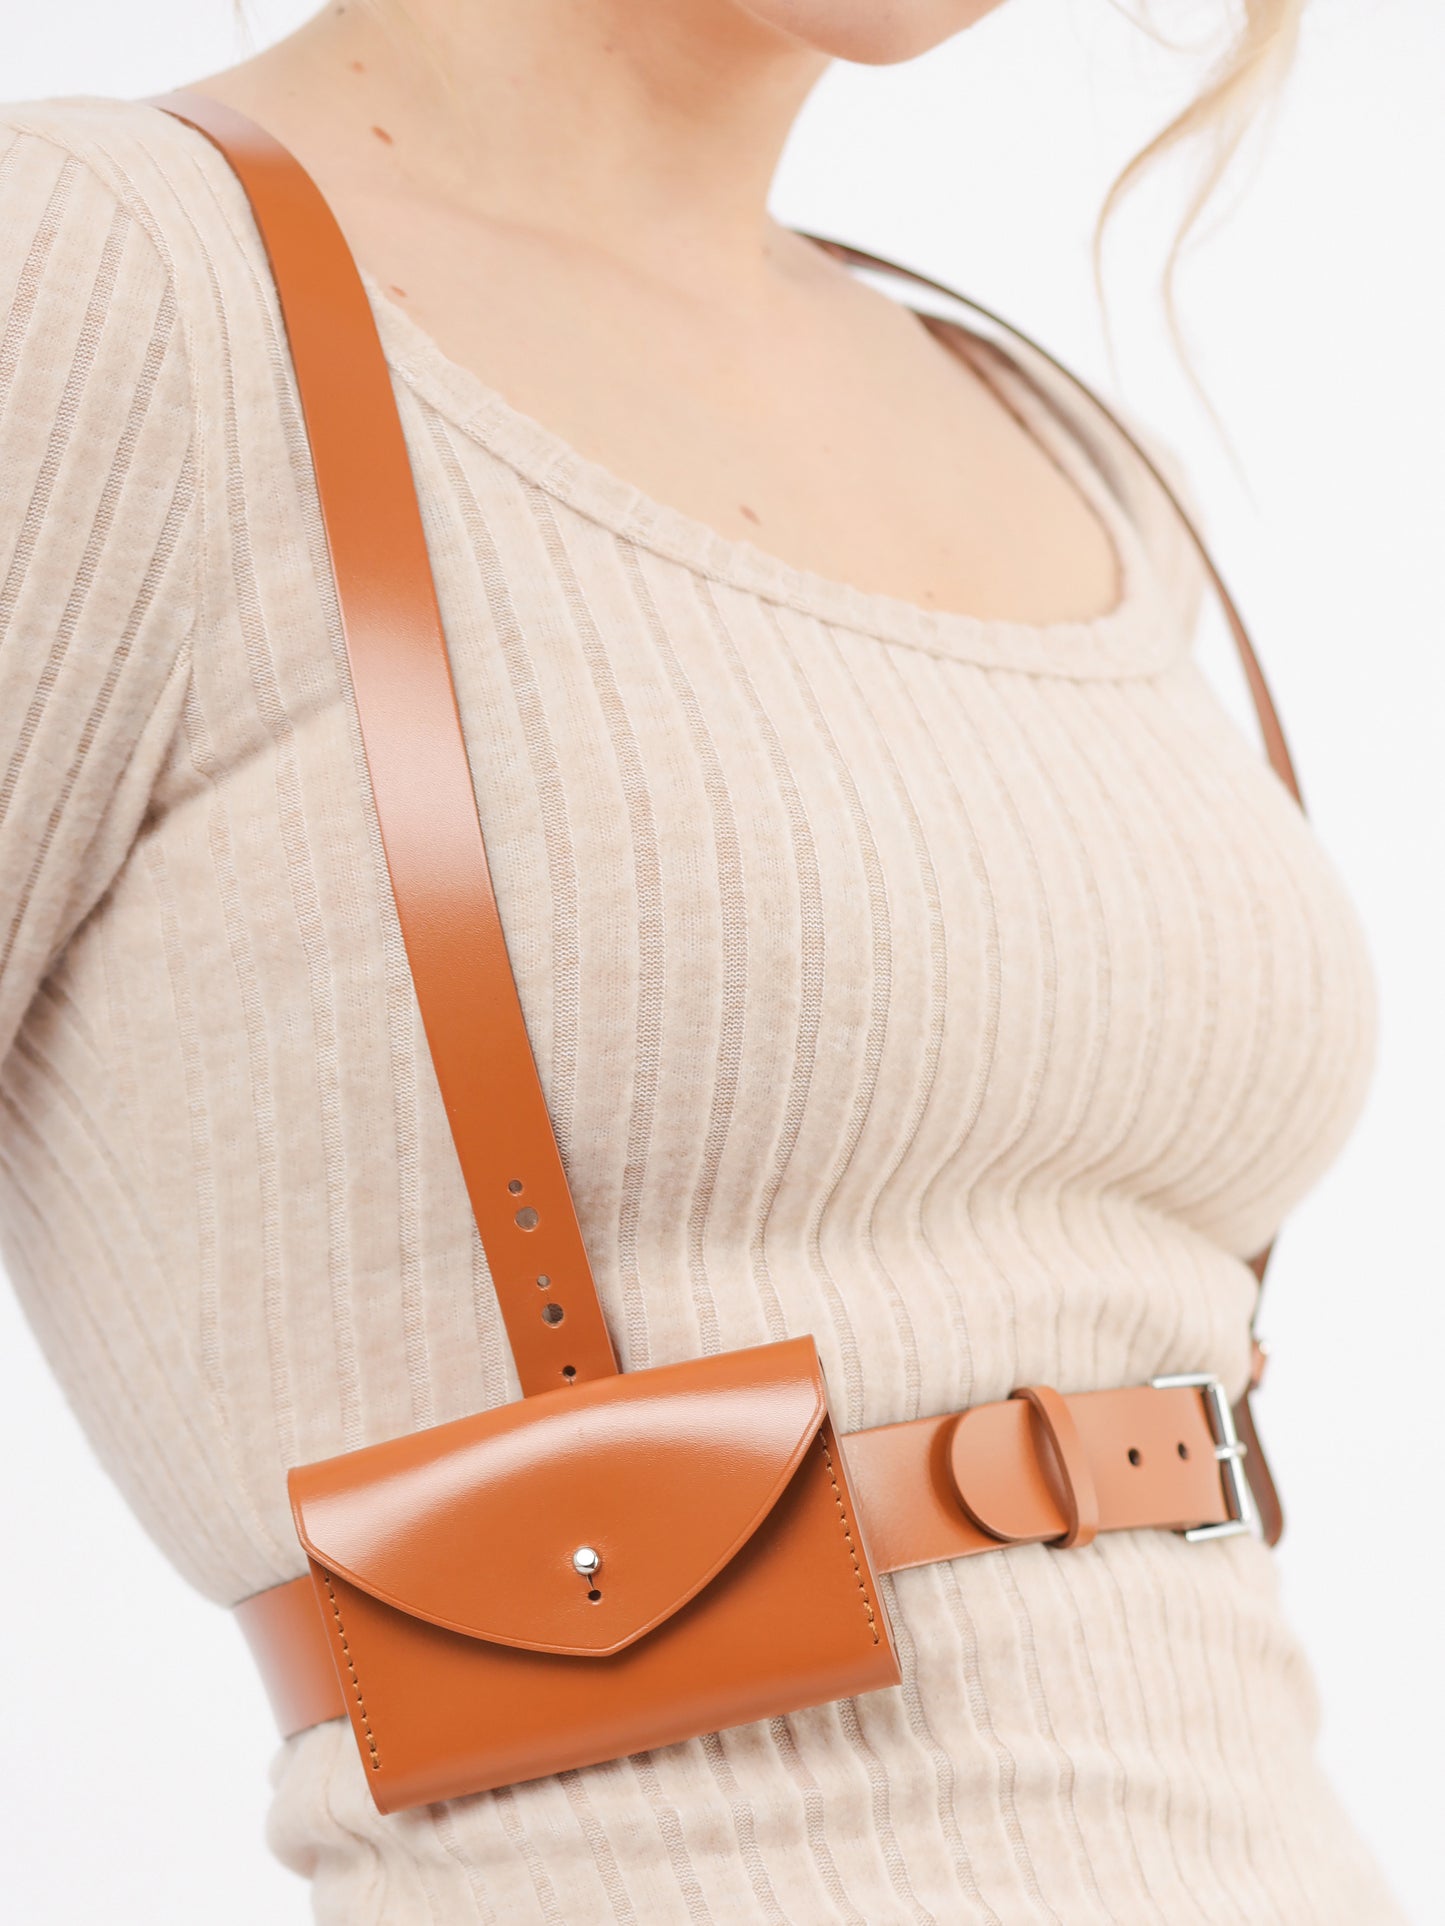 Detailed view of brown slim envelope harness